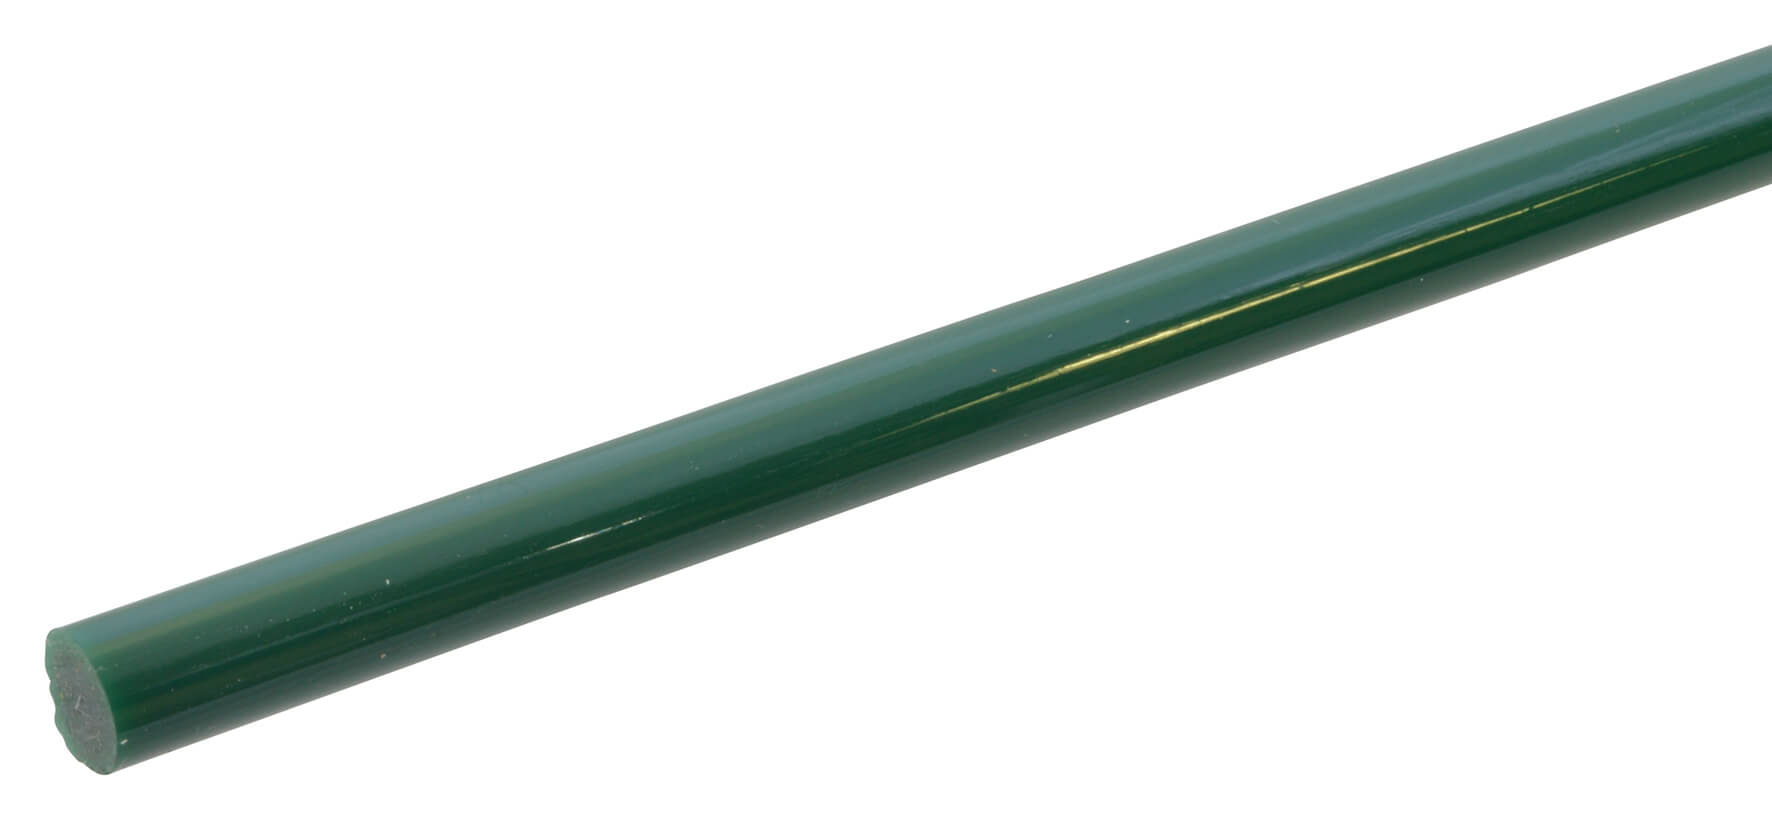 Acrylic Rod 6.4mm x 610mm - Solid Green